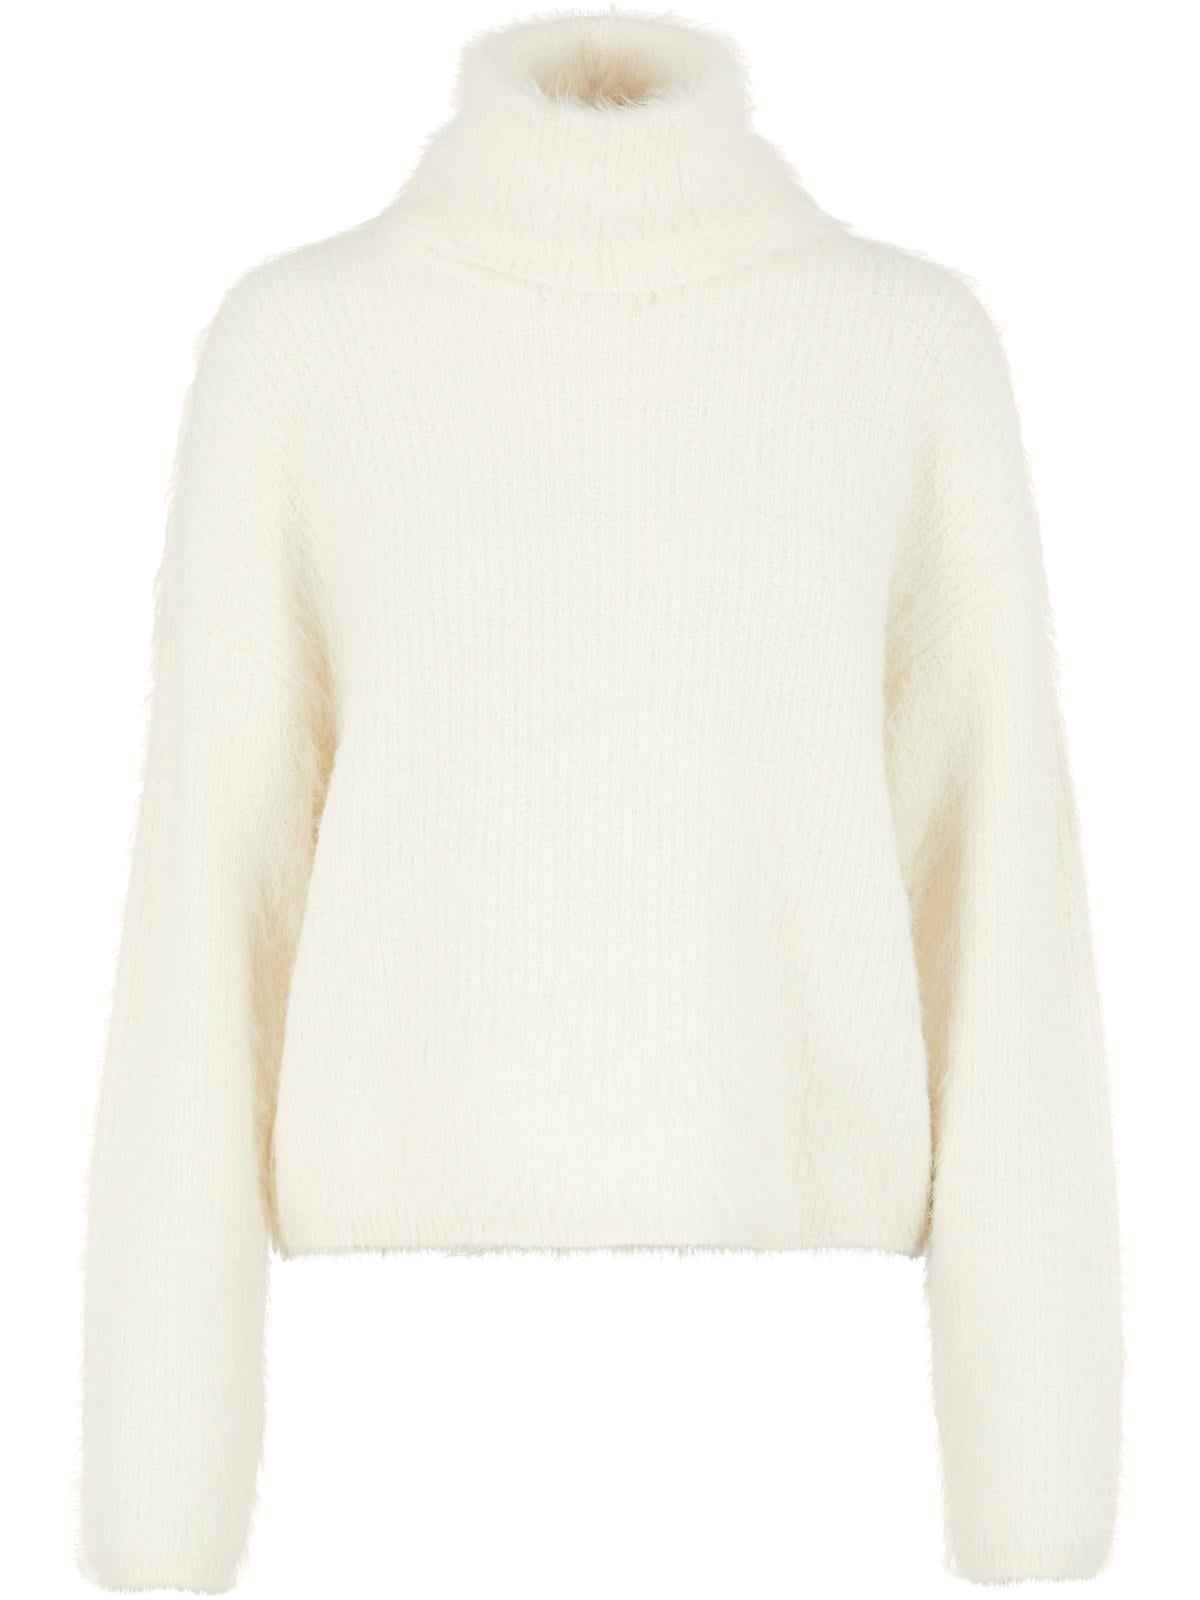 Vero Moda Womens Poilu Turtleneck Sweater White M - Walmart.com